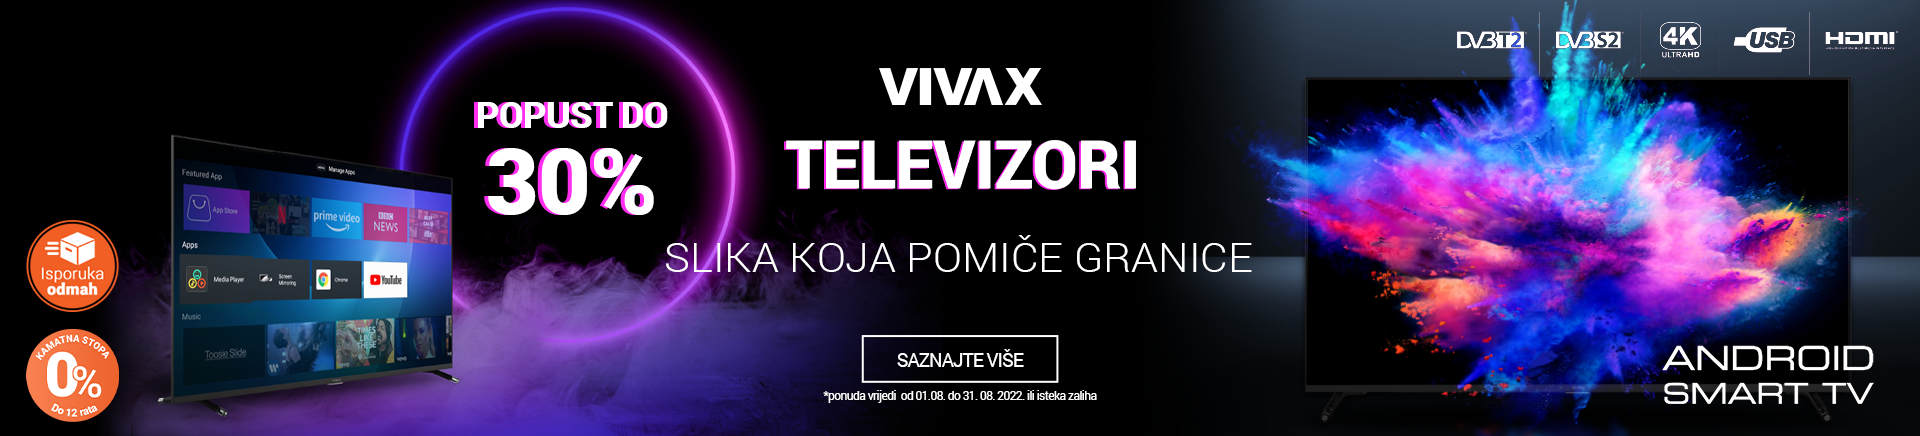 BA Vivax televizori slika koja pomiče granice MOBILE 380 X 436.png